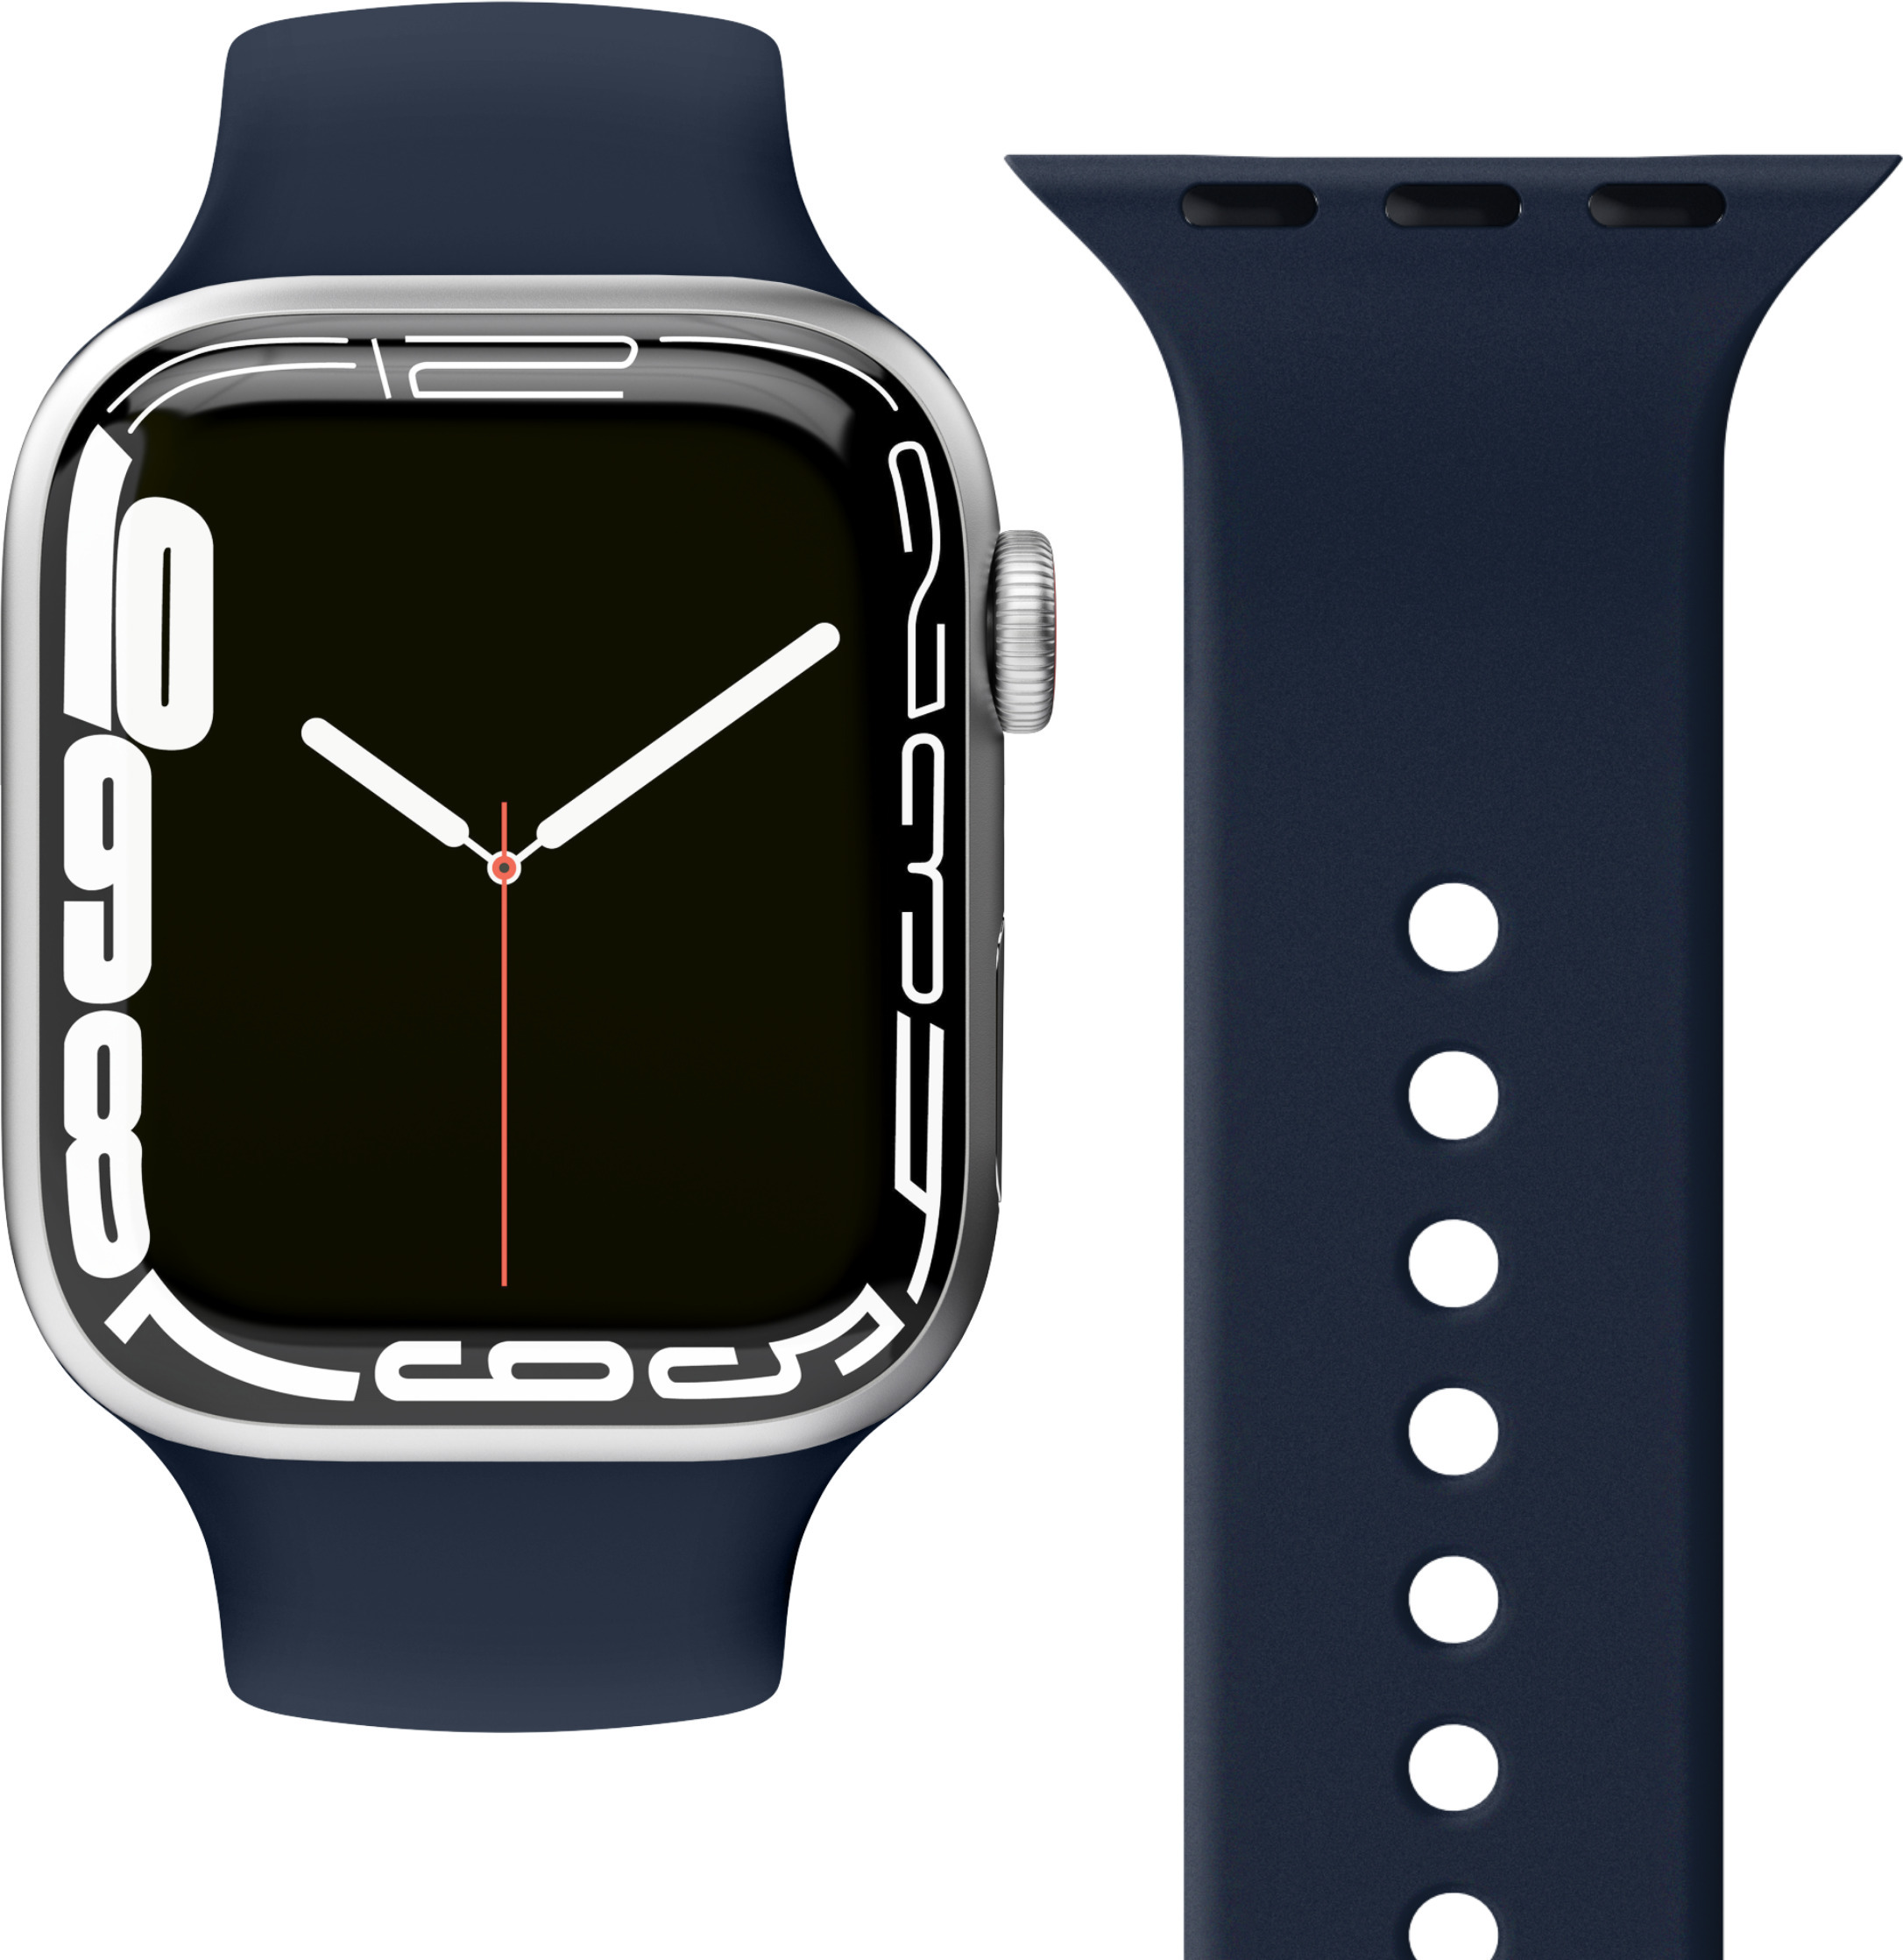 Original Apple watch bands, Apple accessories, smart watch